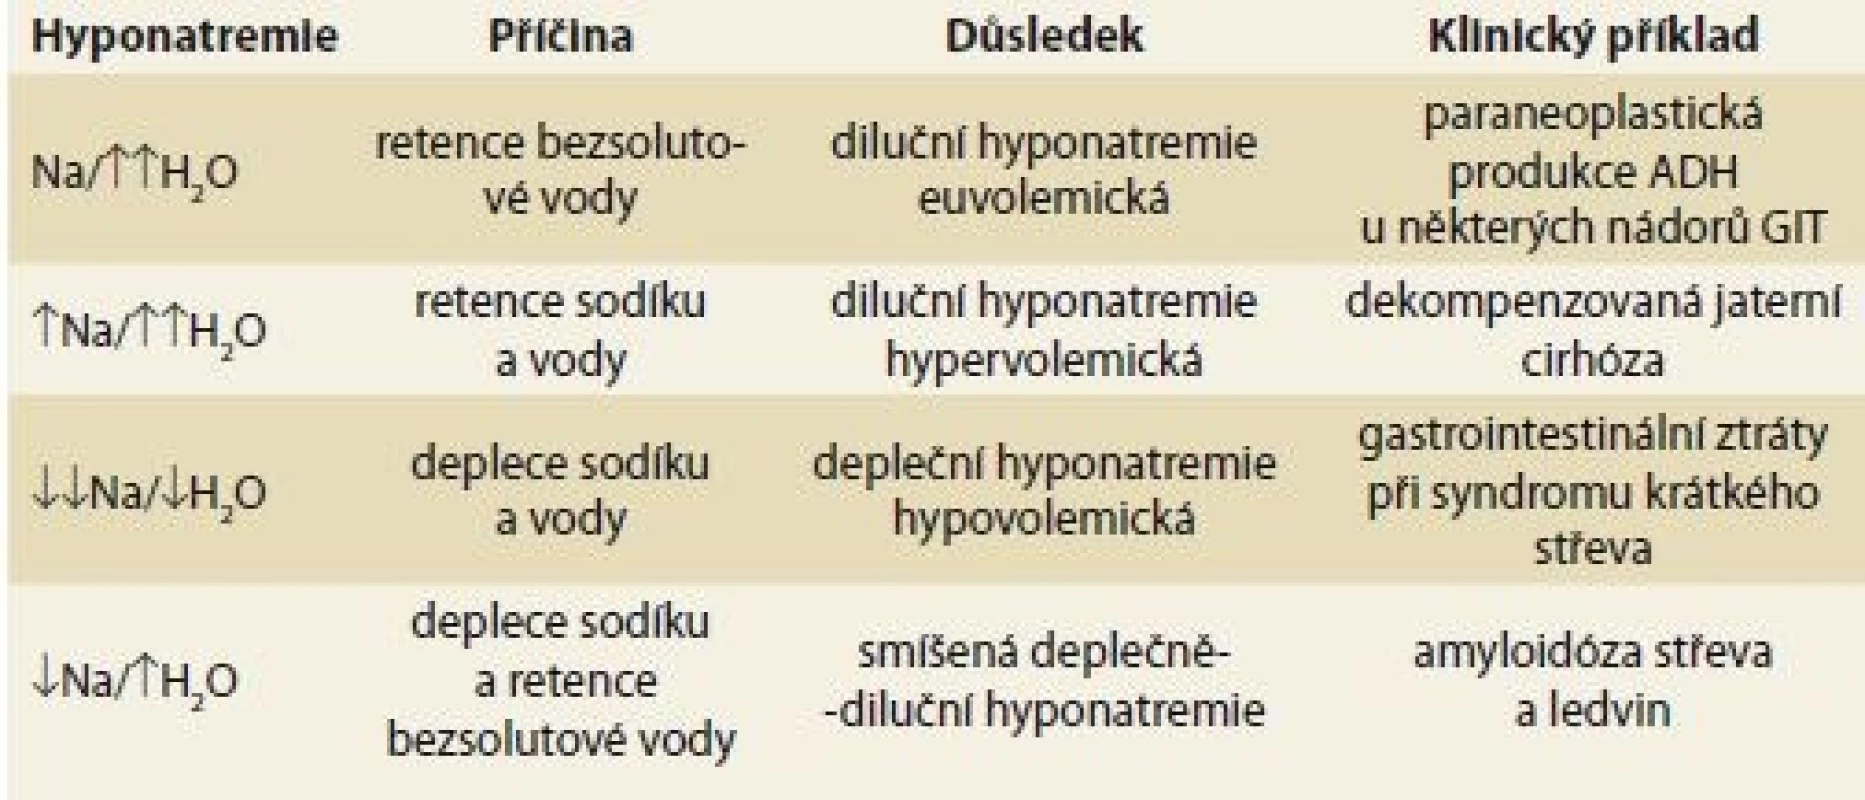 Diferenciální diagnóza hyponatremie s přihlédnutím k etiologii.<br>
Tab. 1. Differential diagnosis of hyponatremia taking into account aetiology.